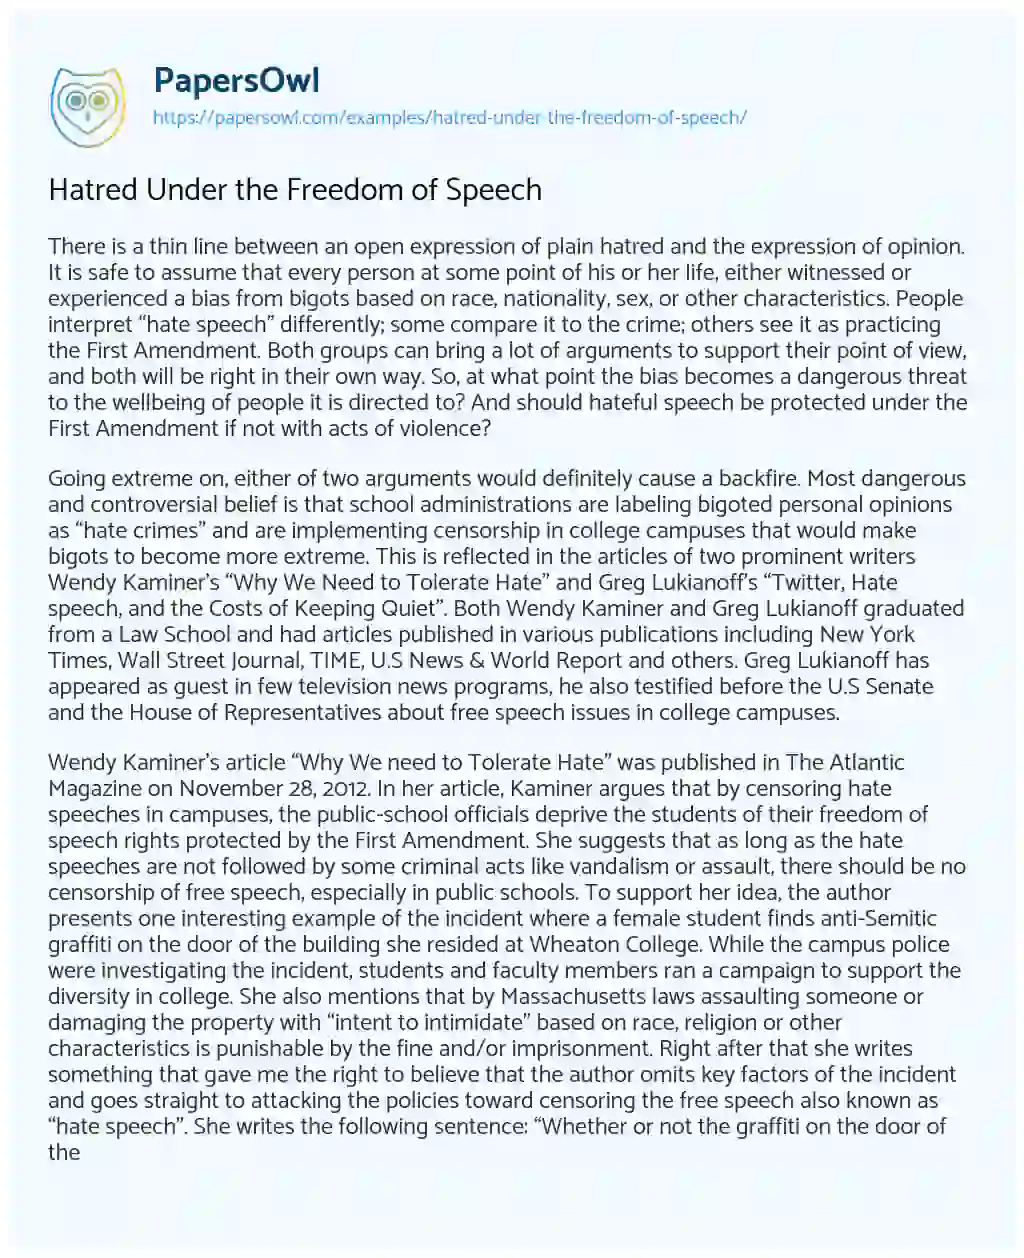 Essay on Hatred under the Freedom of Speech